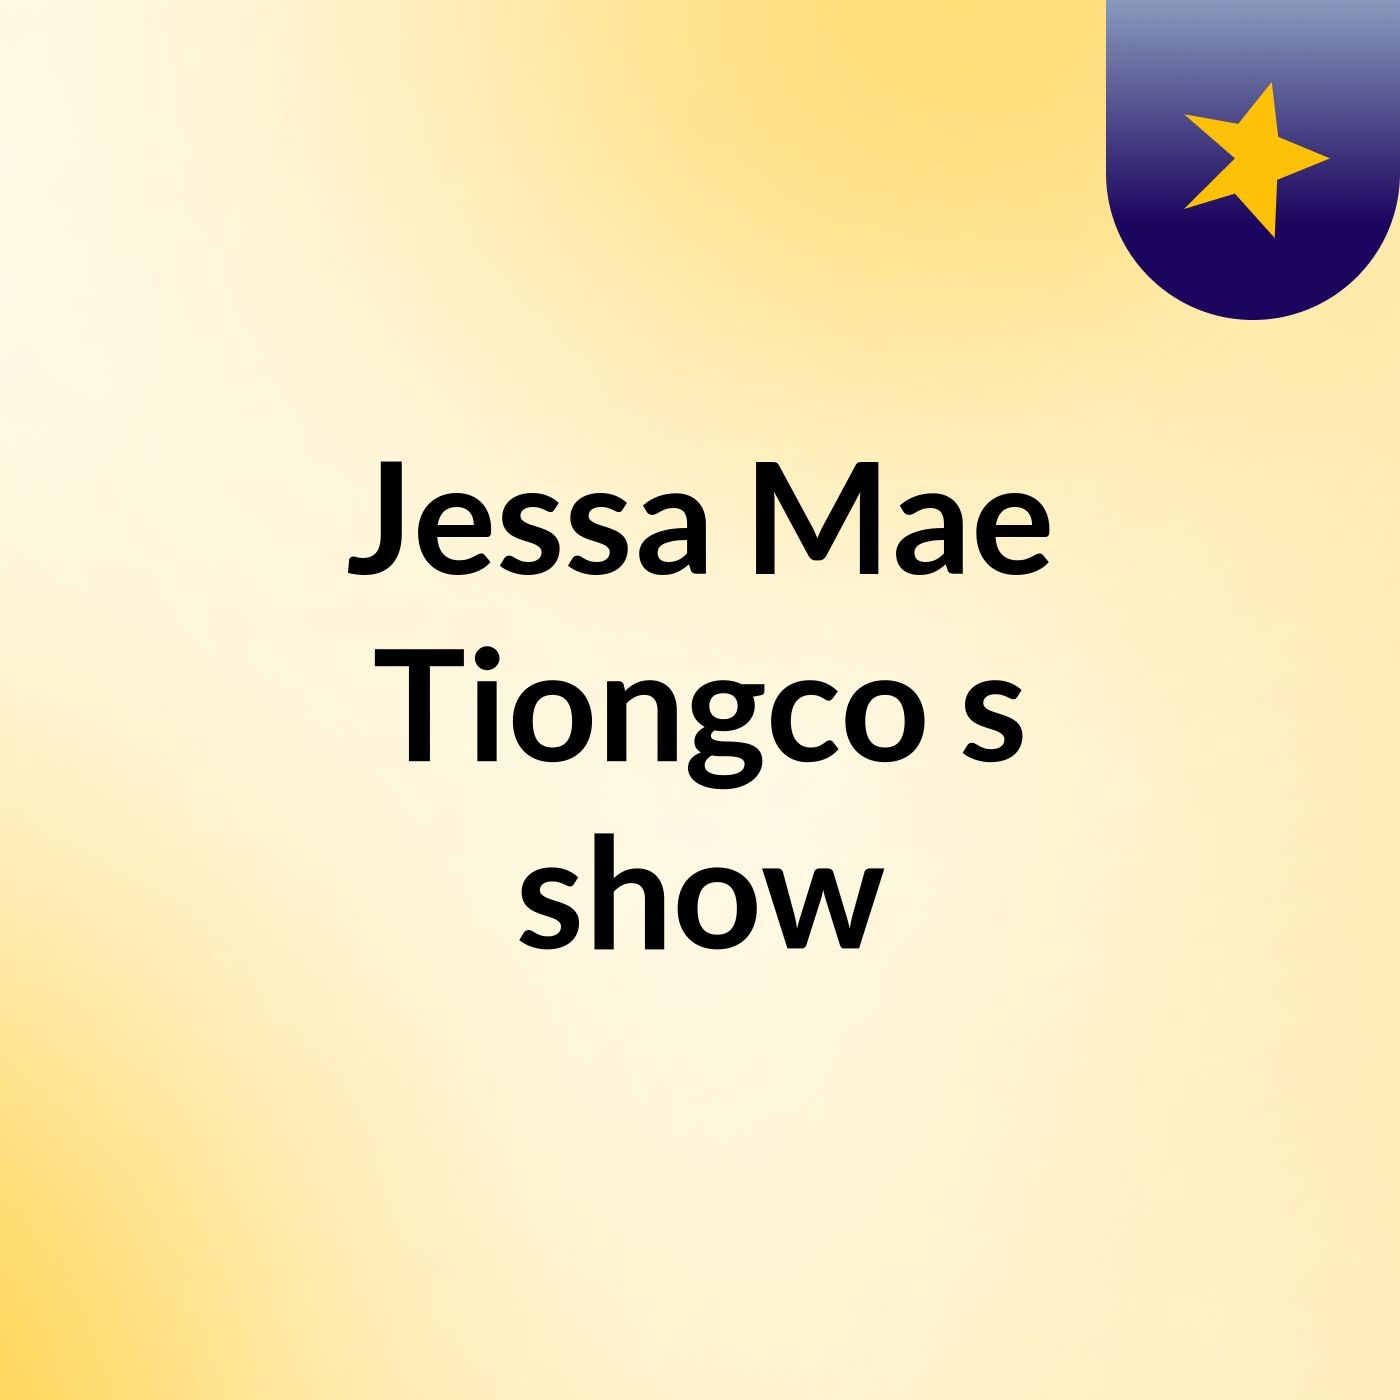 Jessa Mae Tiongco's show